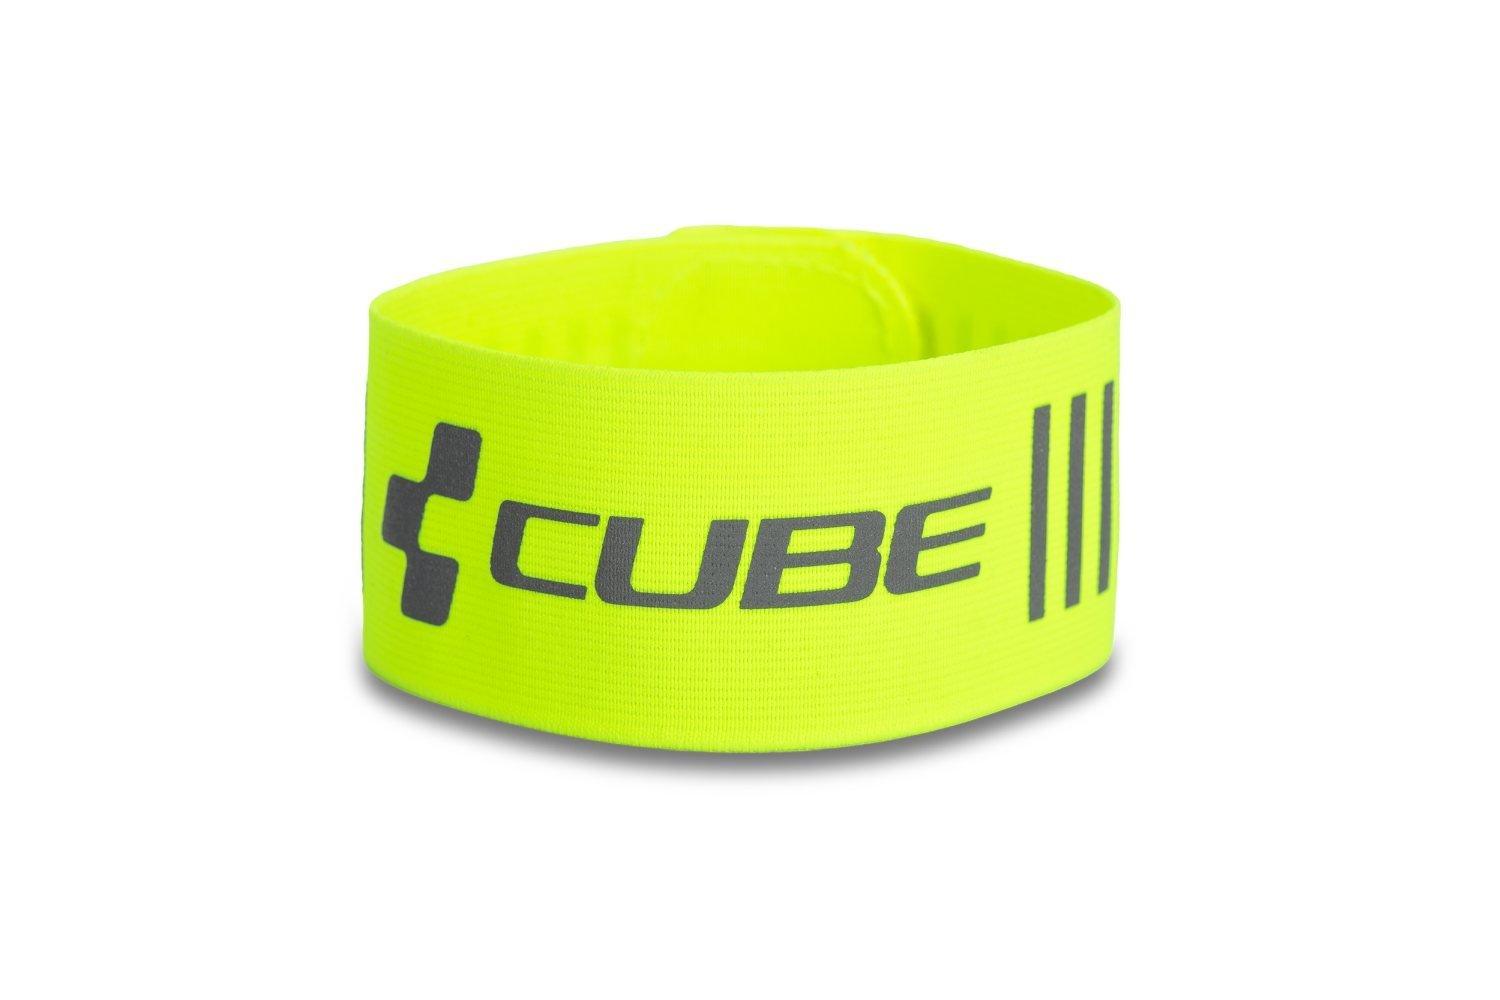 Cube Safety Band - Liquid-Life